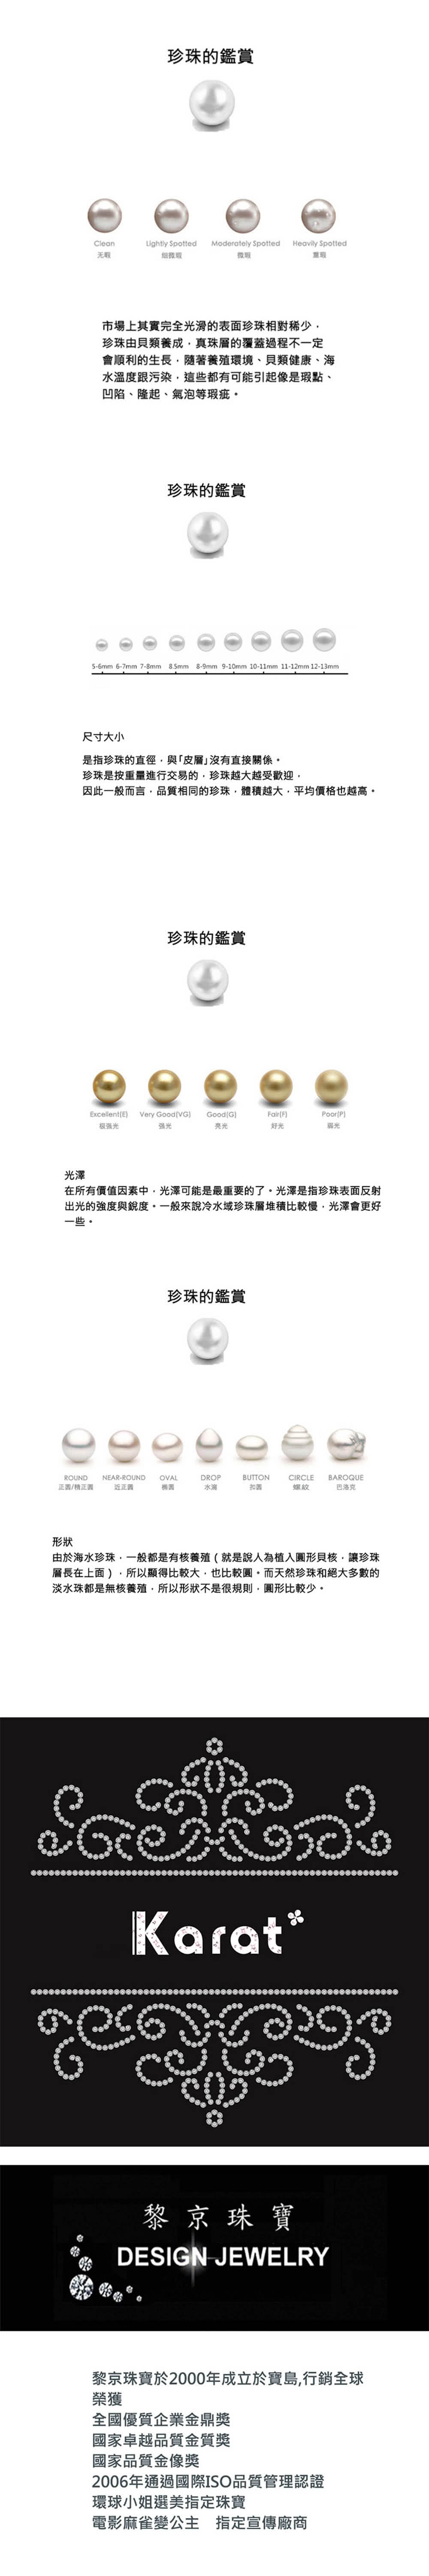 KARAT 天然珍珠 9-10 MM 夾式耳換優惠推薦